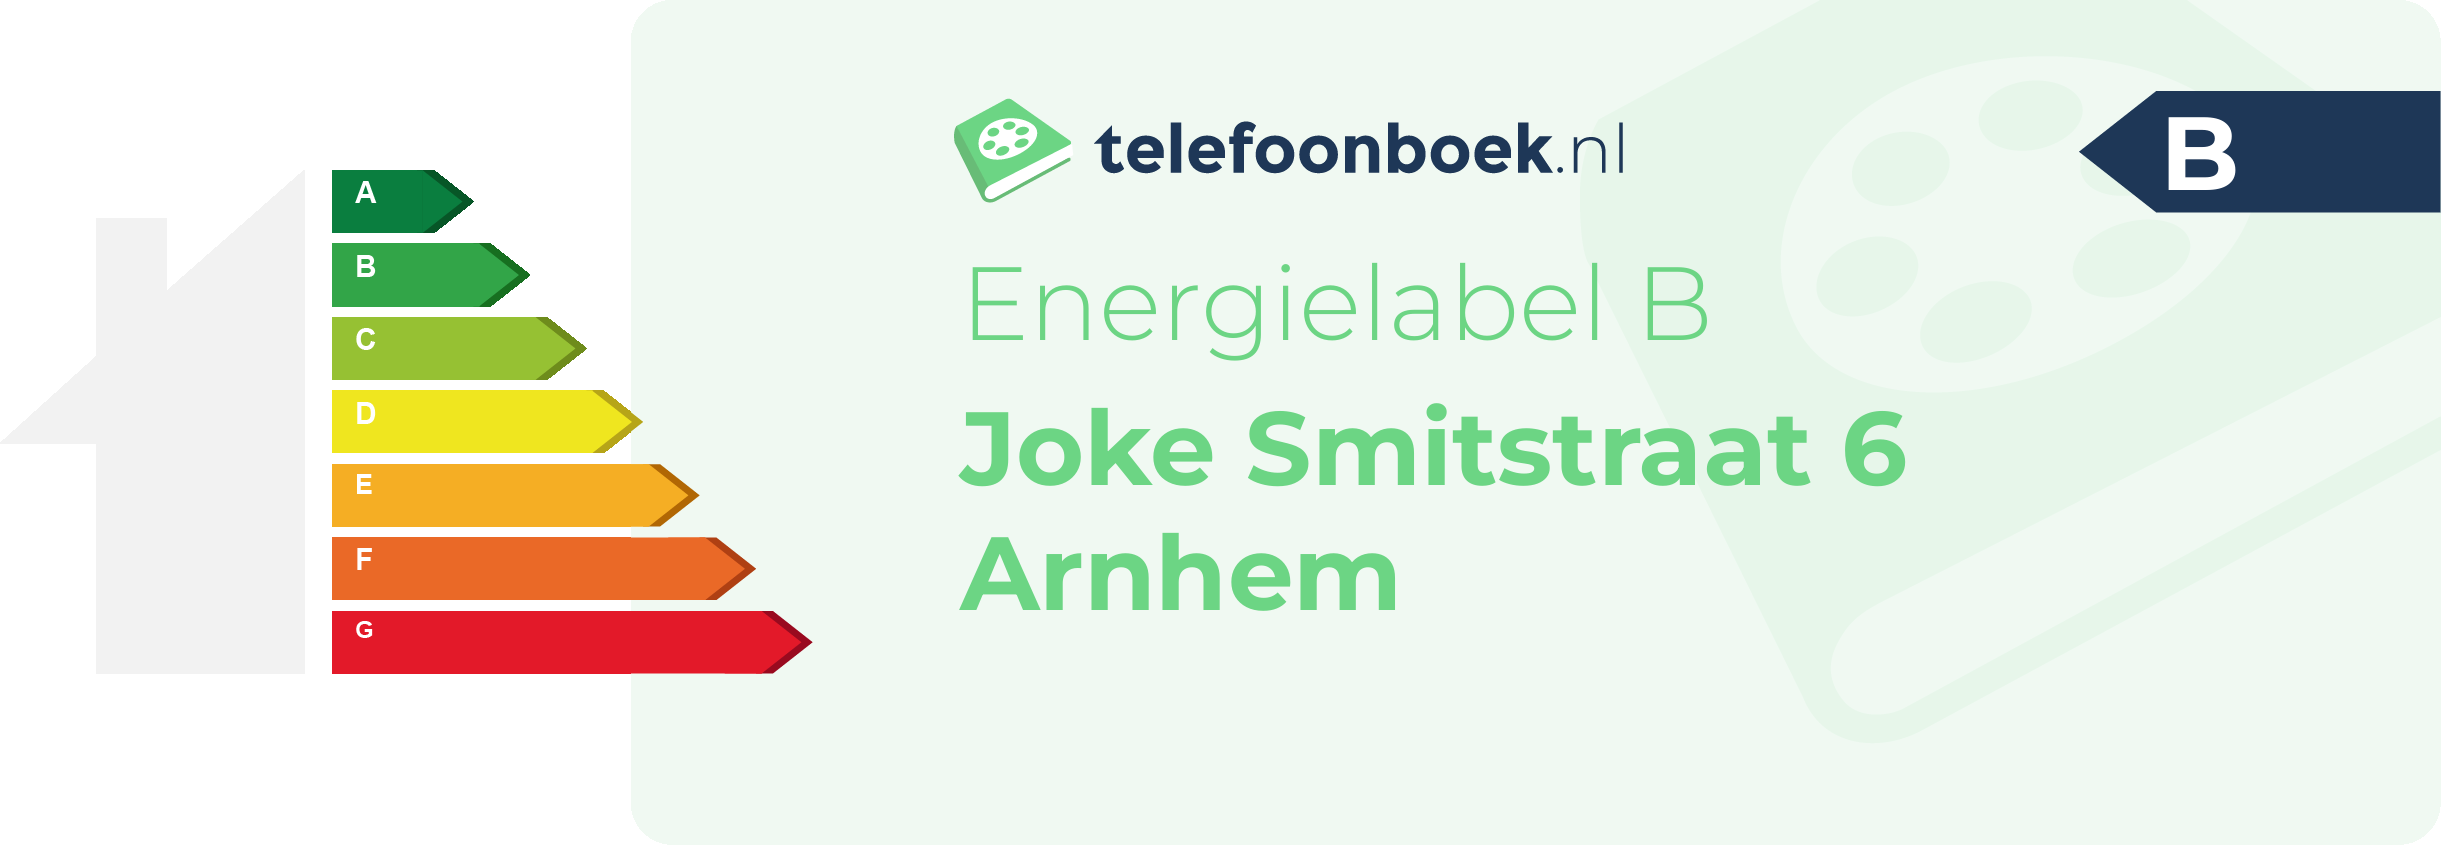 Energielabel Joke Smitstraat 6 Arnhem